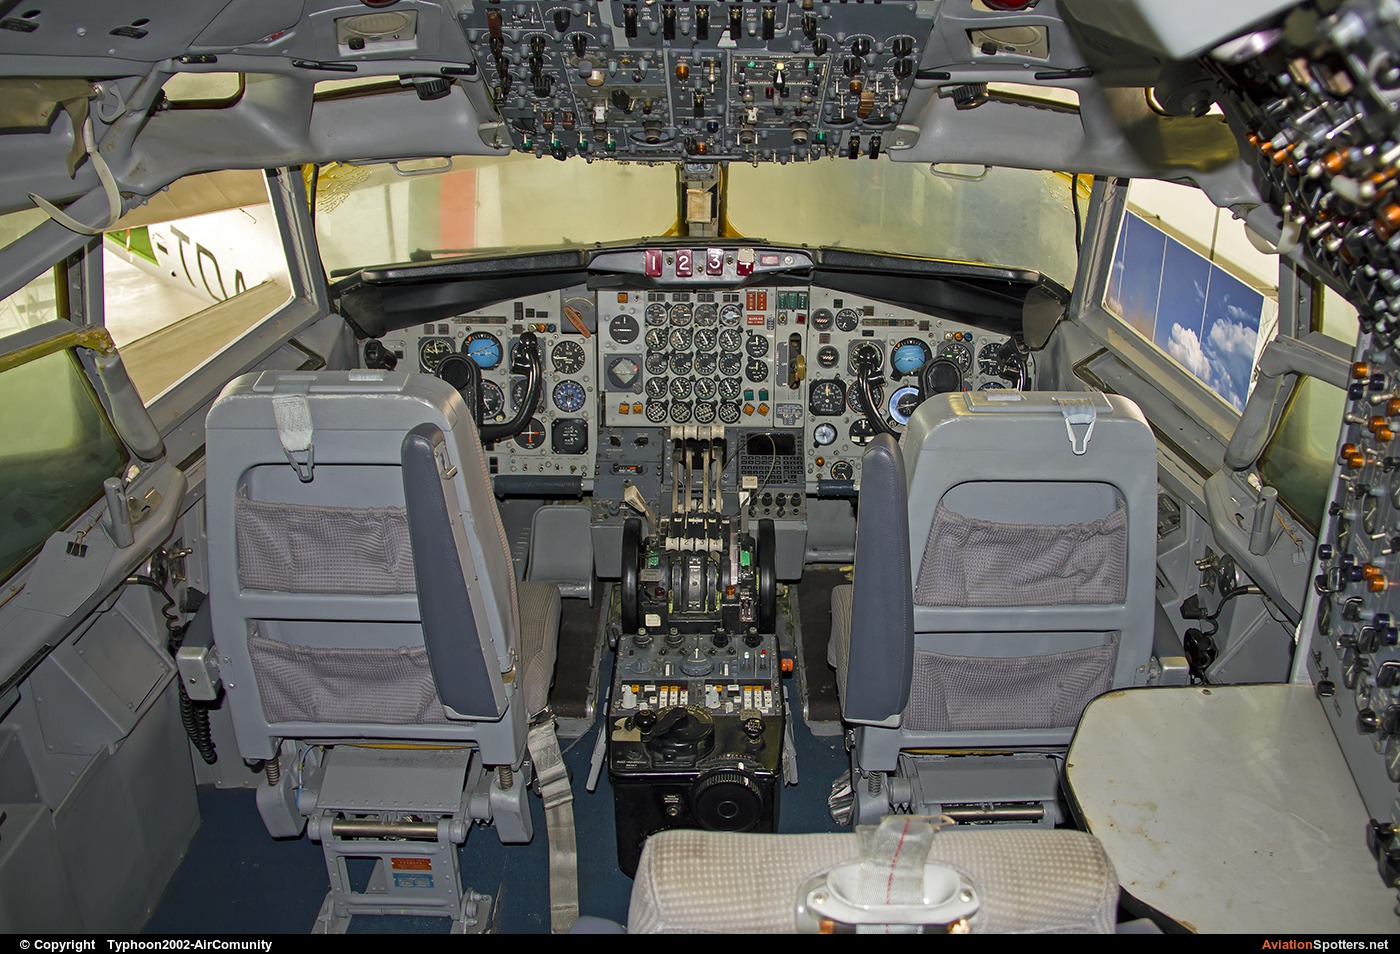 TAP Portugal  -  707-300  (CS-TBD) By Typhoon2002-AirComunity (AirComunity)